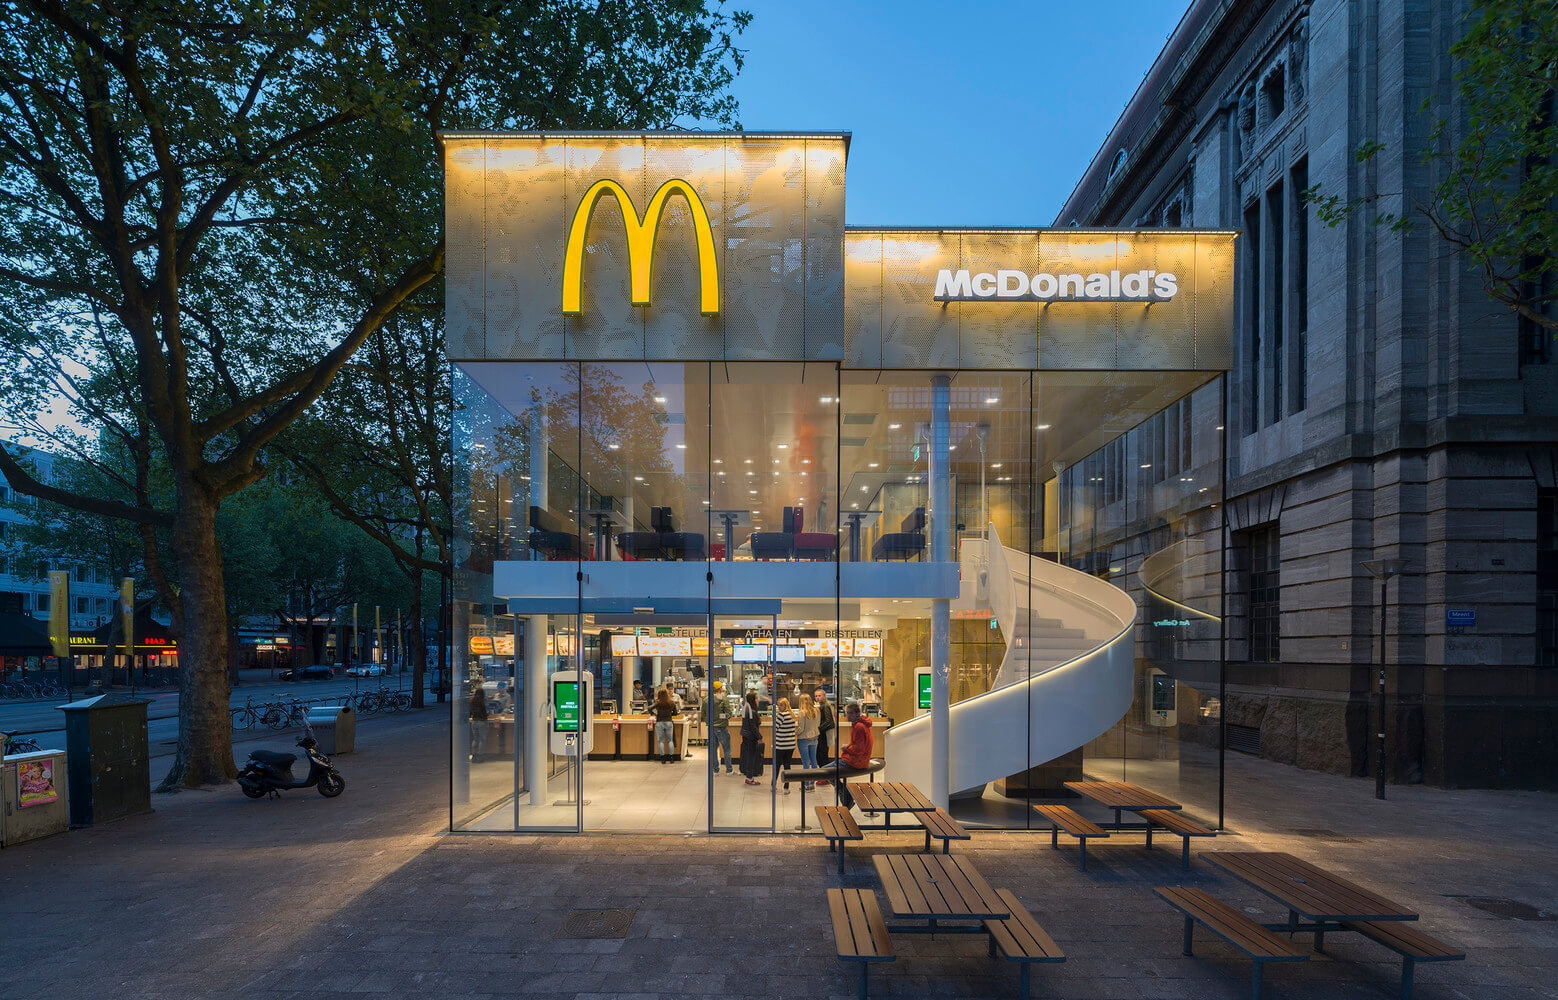 McDonald's external appearance